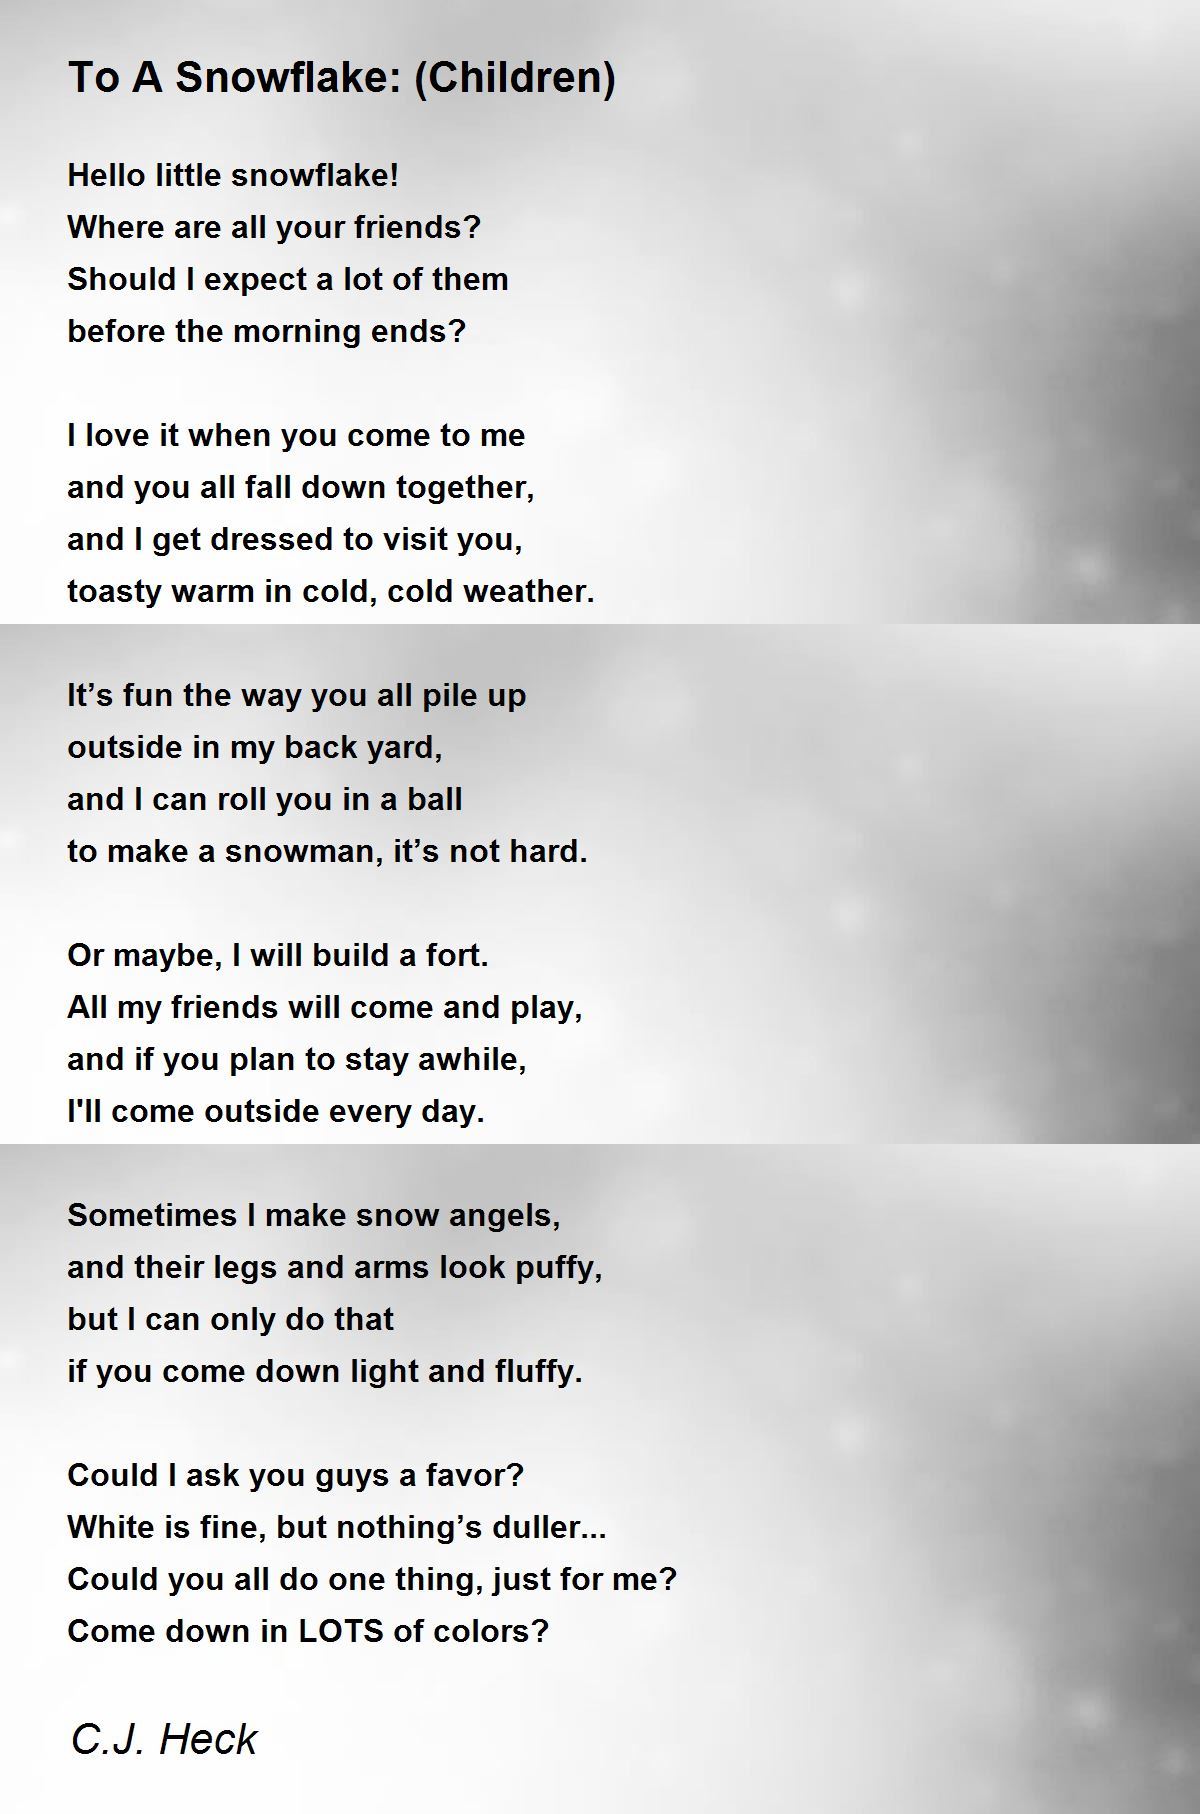 snowflake poem for kids